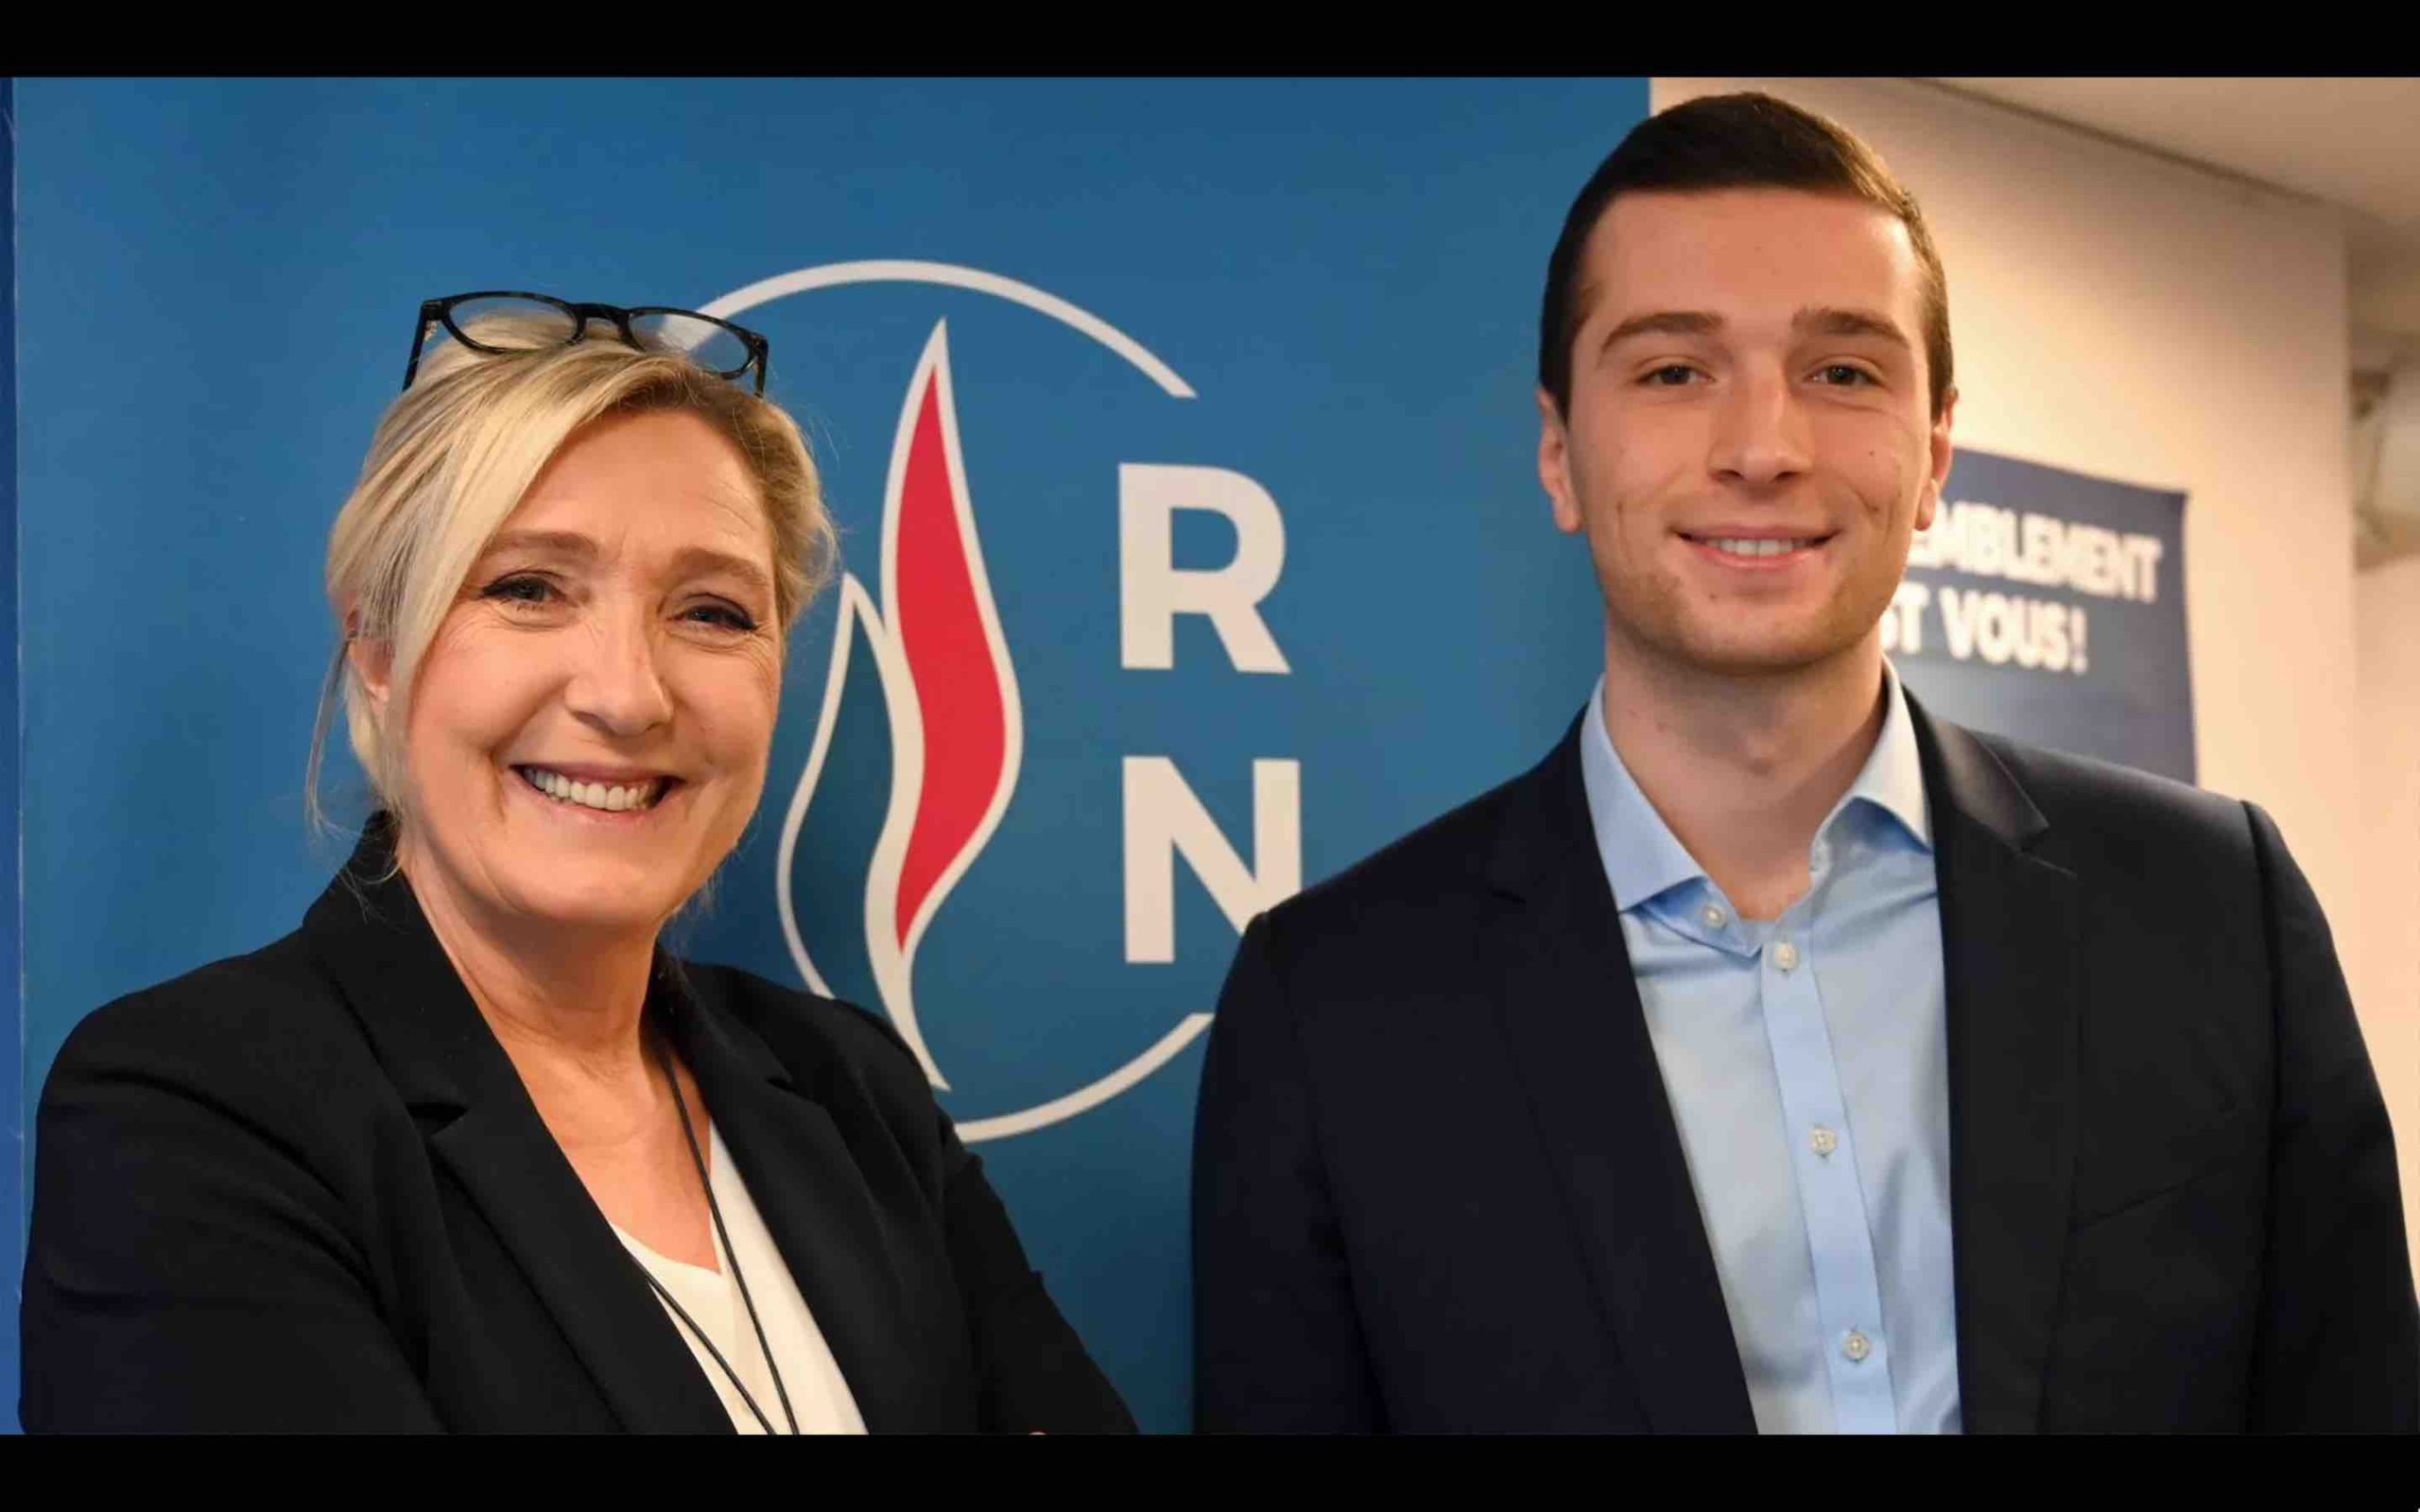 Marine Le Pen Jordan Bardella front national FN rassemblement national RN